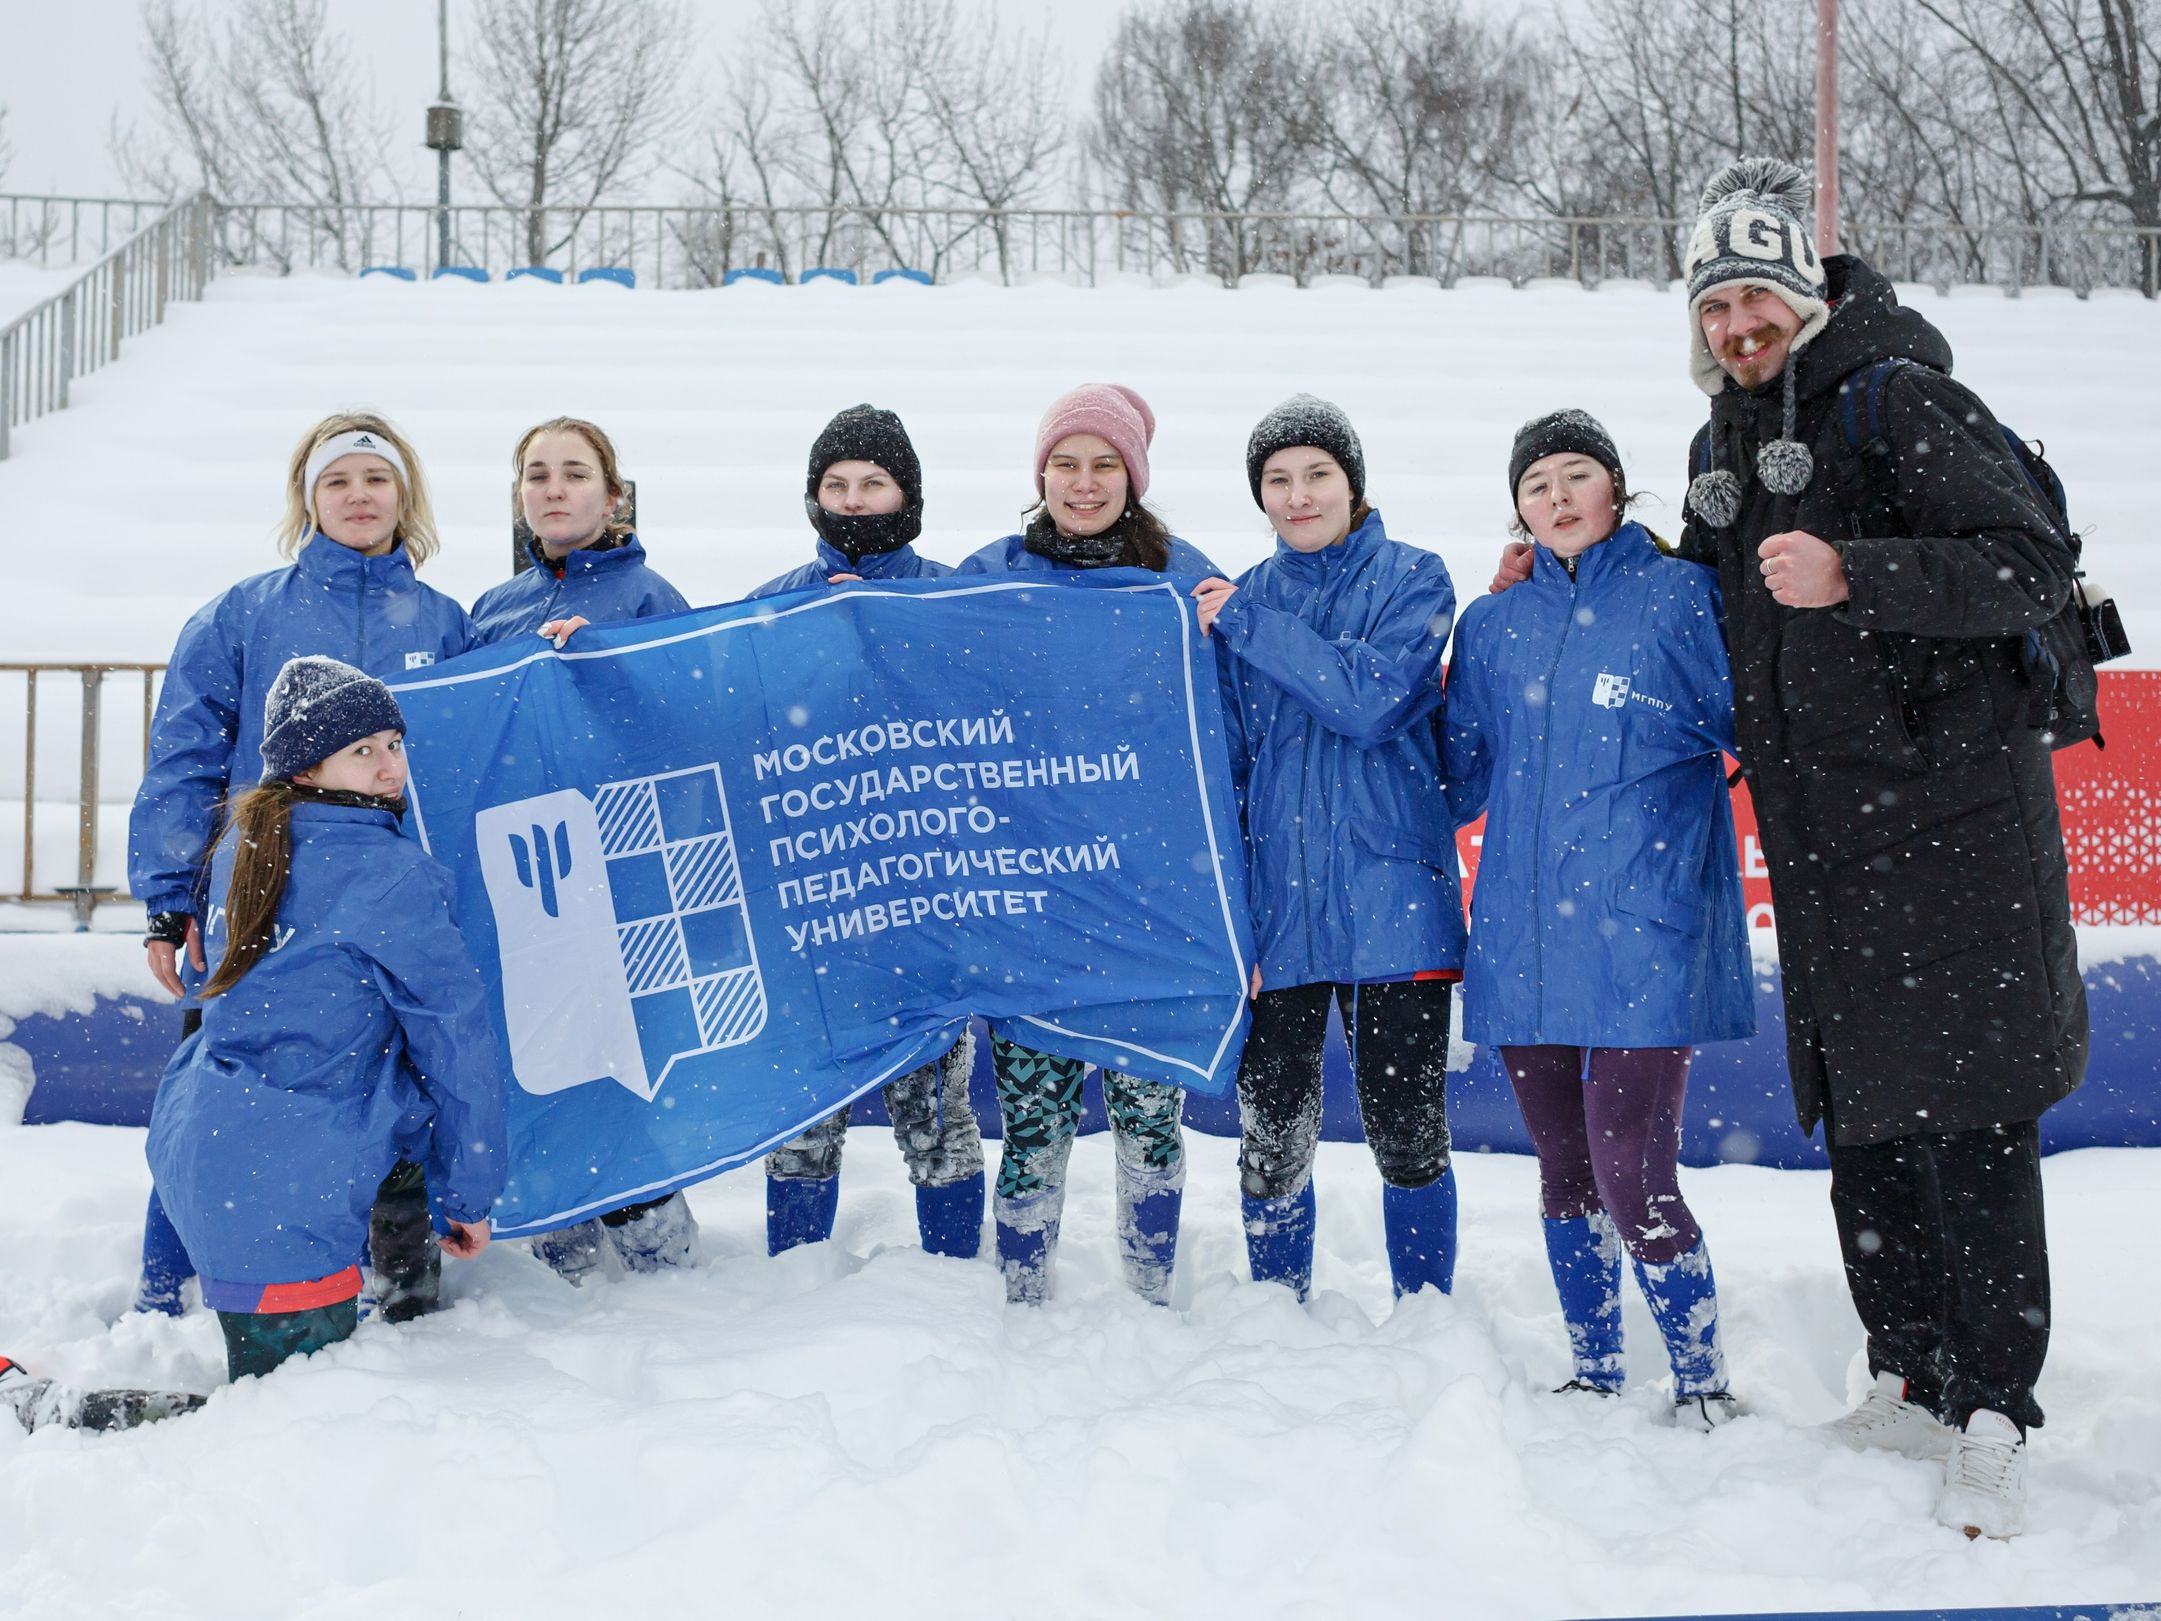 чемпионате Москвы по регби на снегу